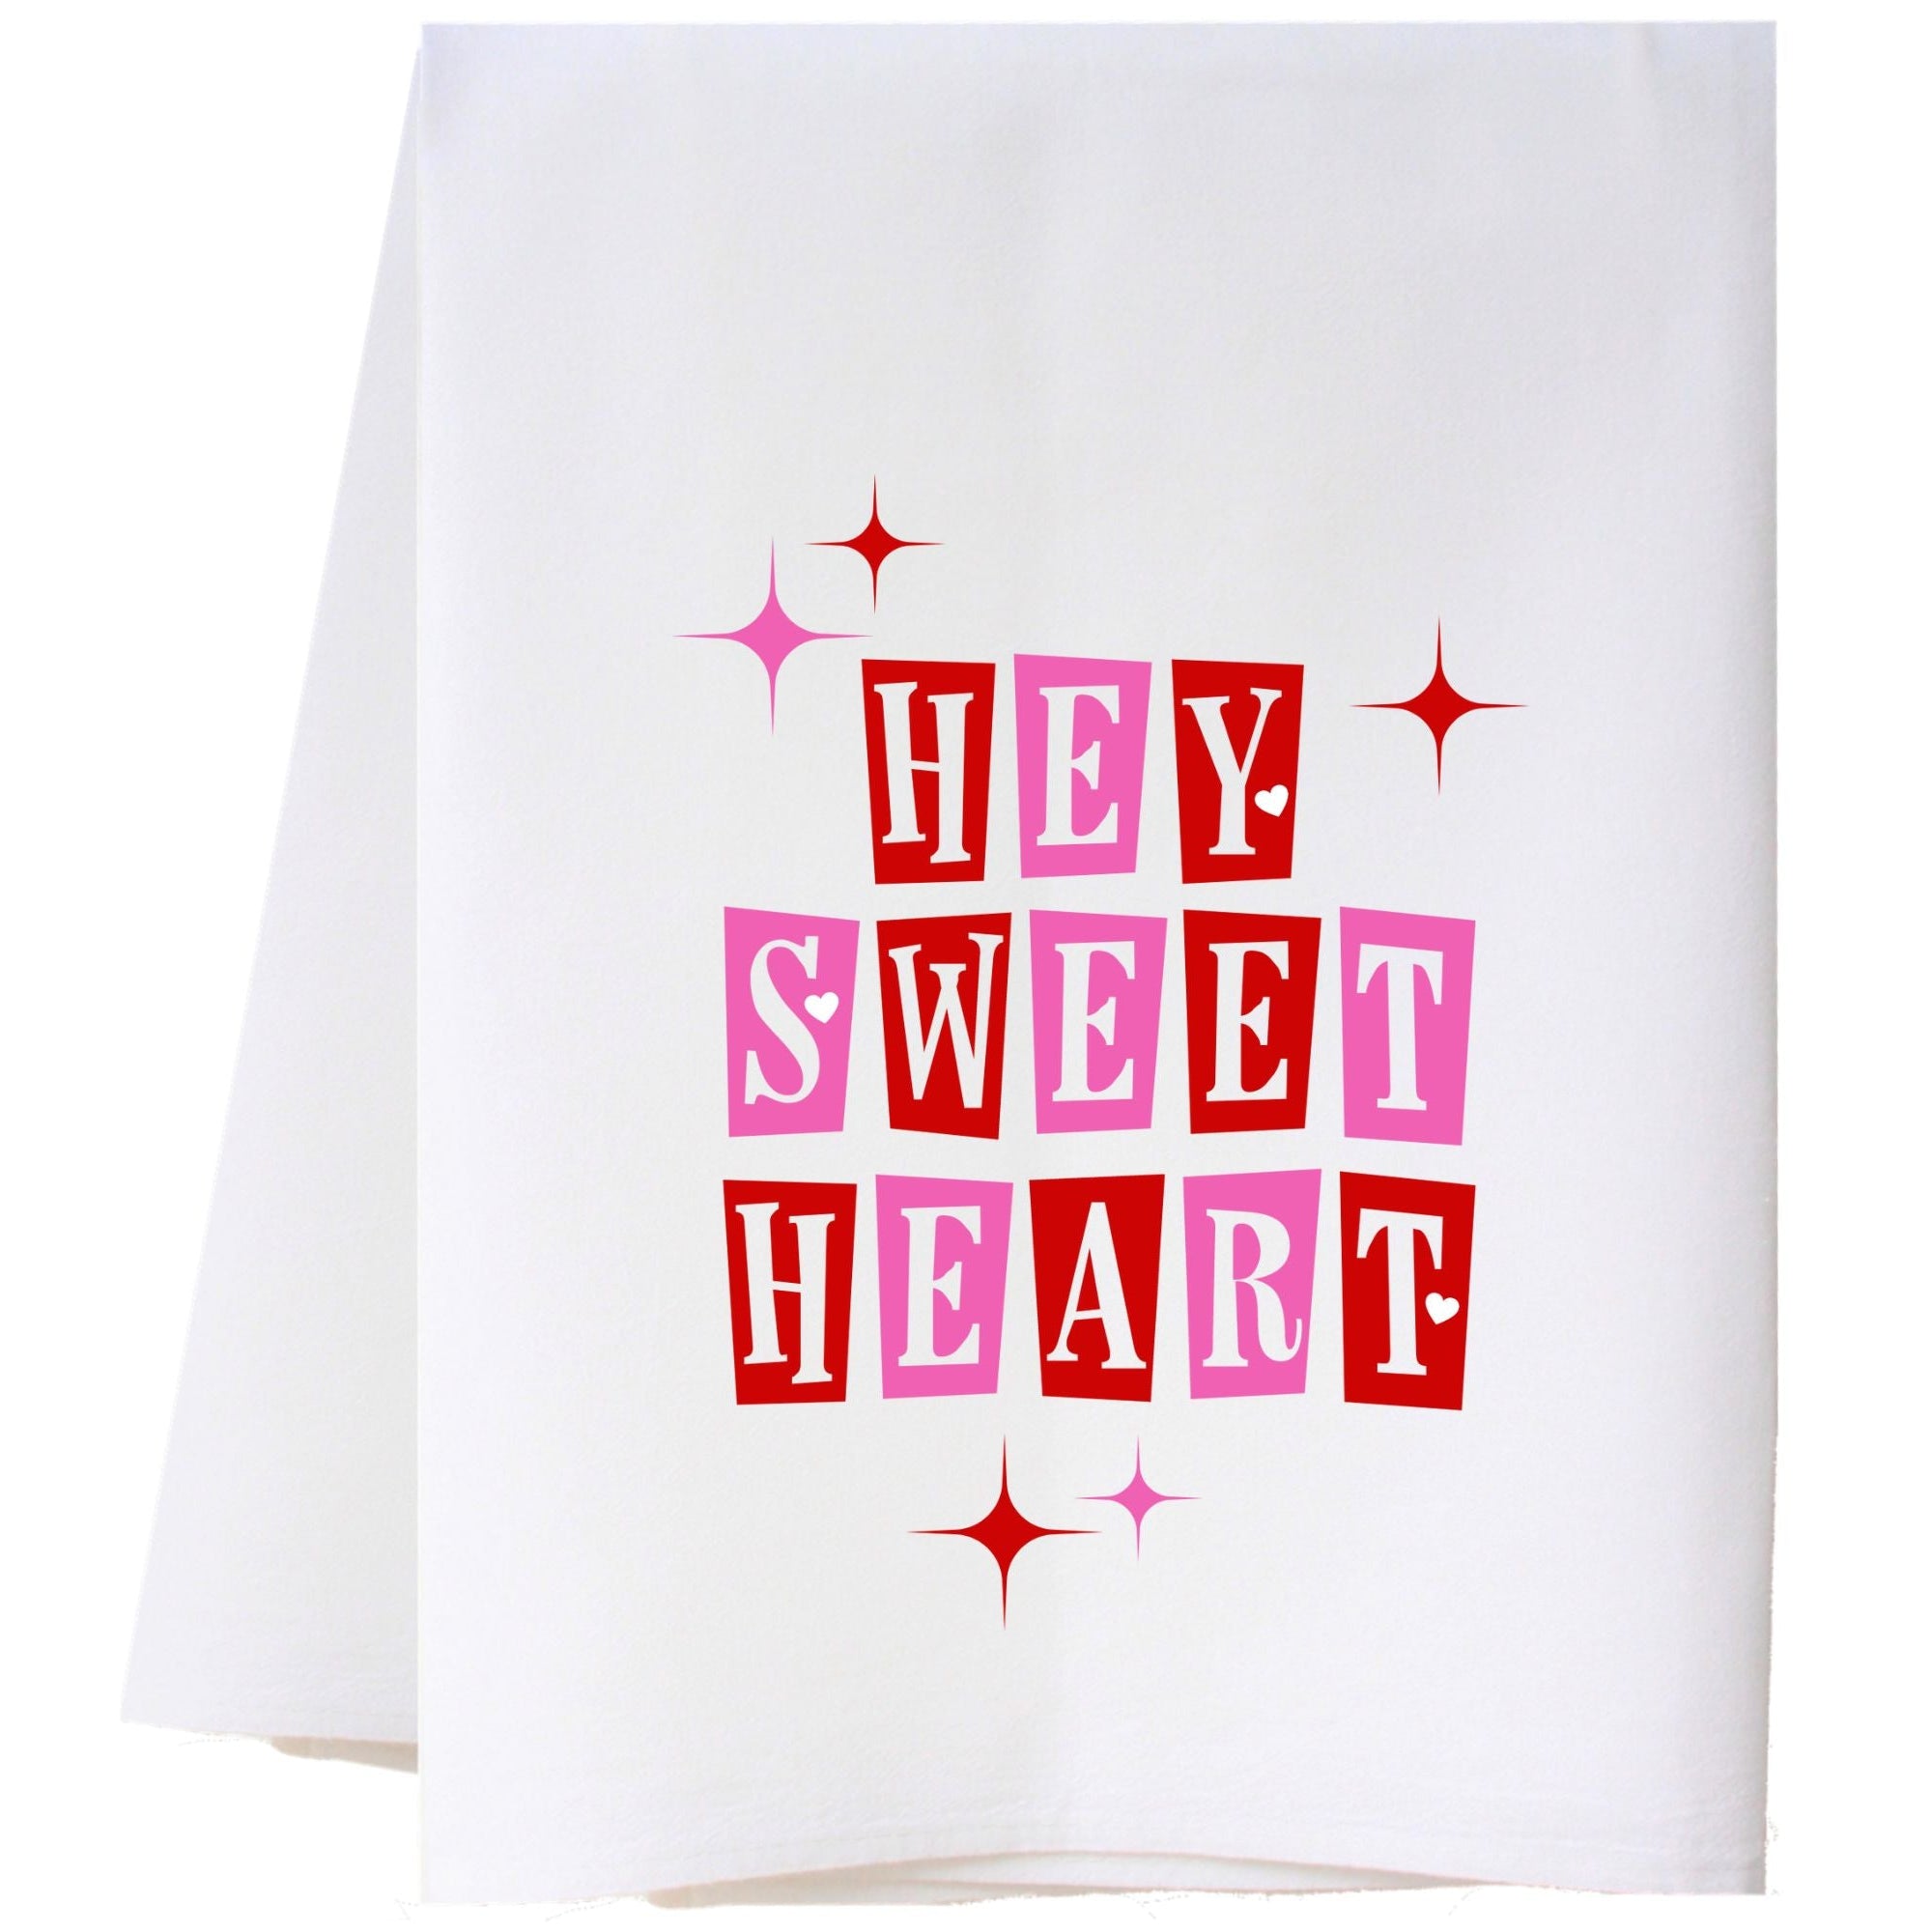 Hey Sweetheart Flour Sack Towel